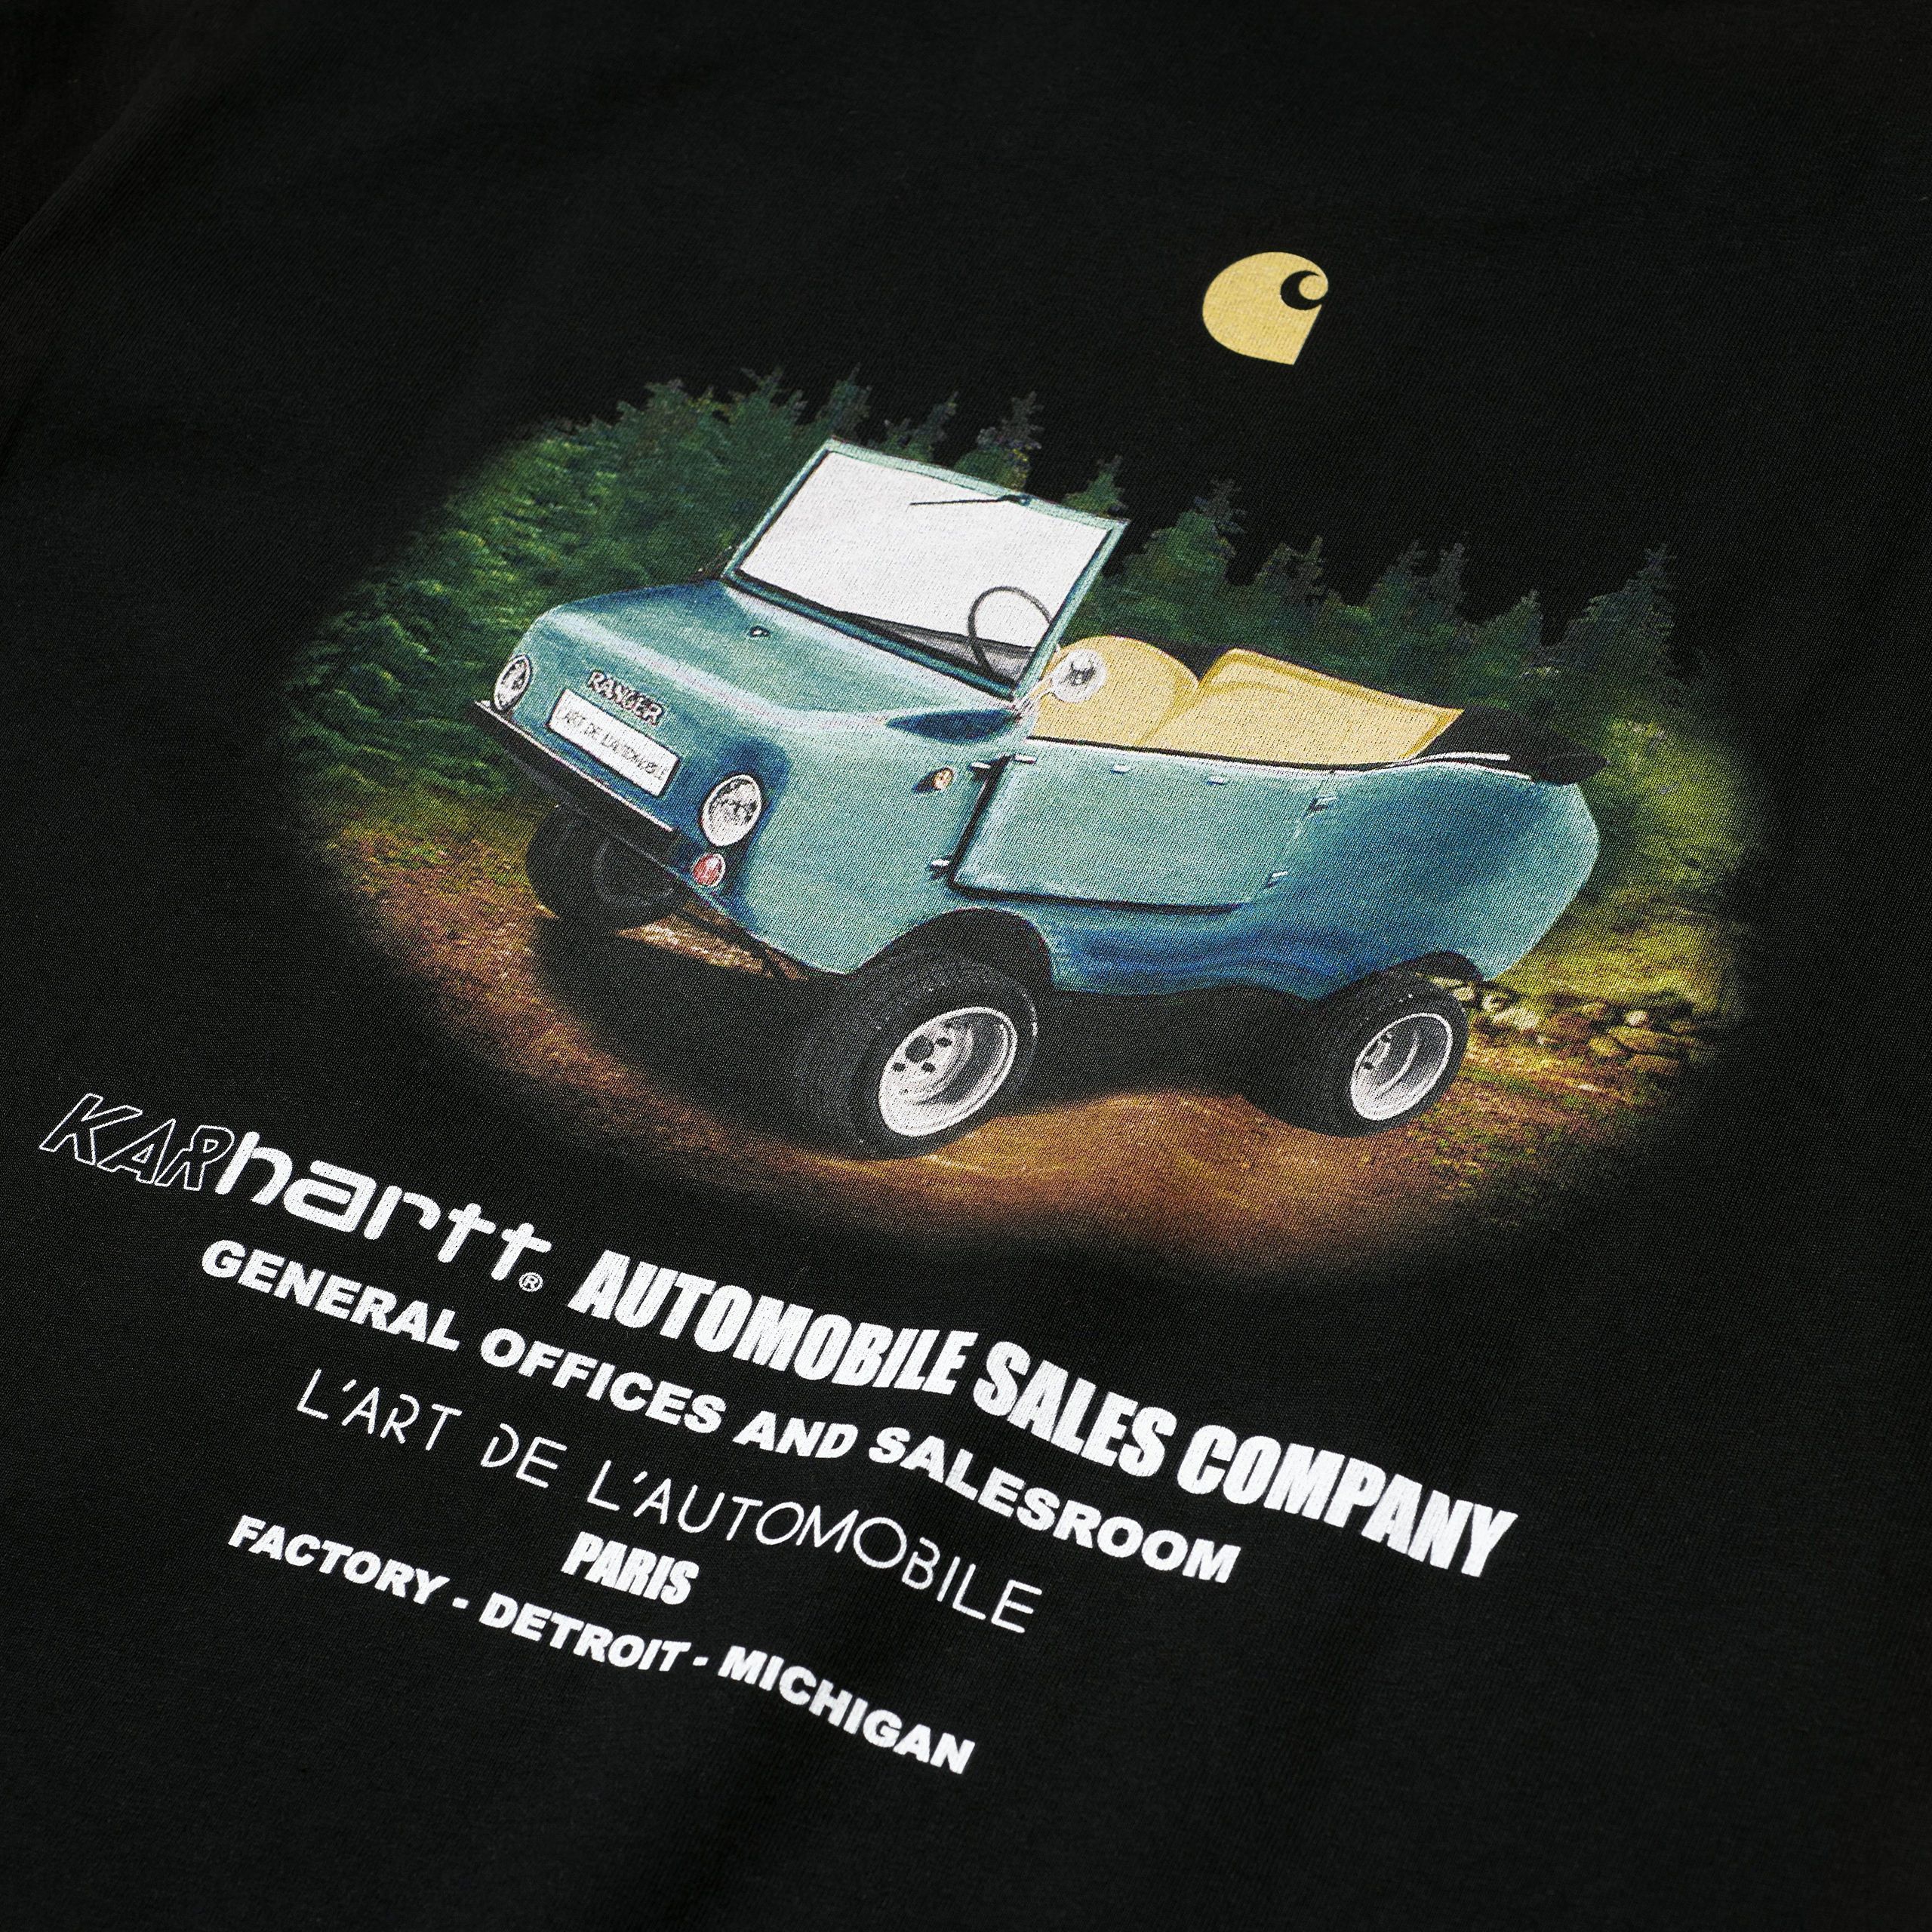 Carhartt Wip KAR L'Art De L'Automobile X Carhartt Karhartt T-Shirt 